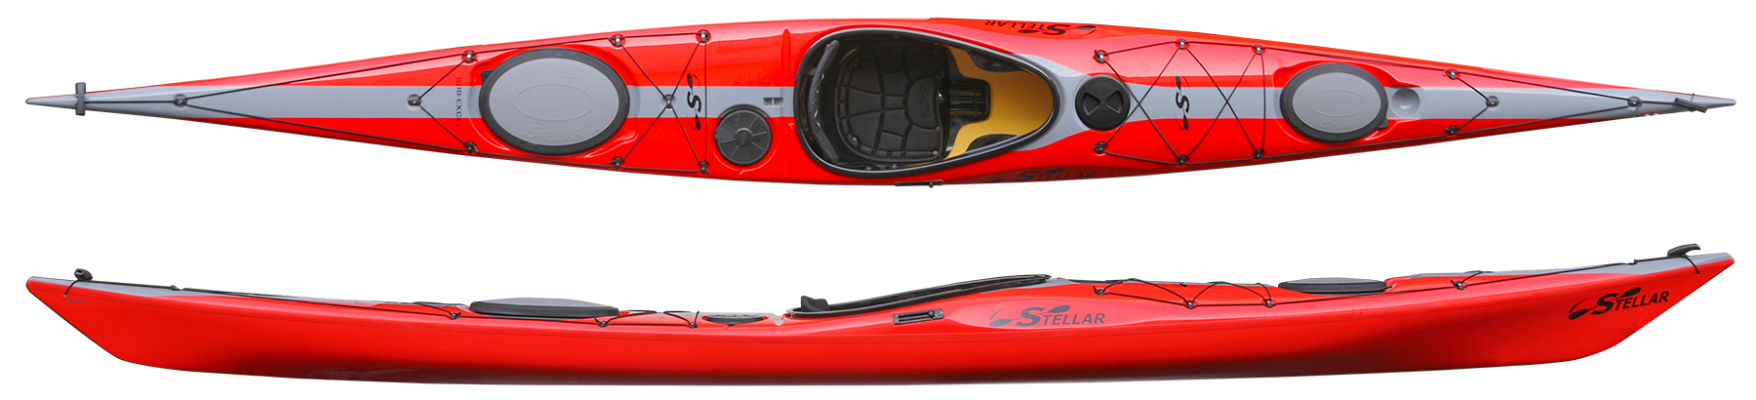 Stellar Intrepid 18′ Sea Kayak (SI18)